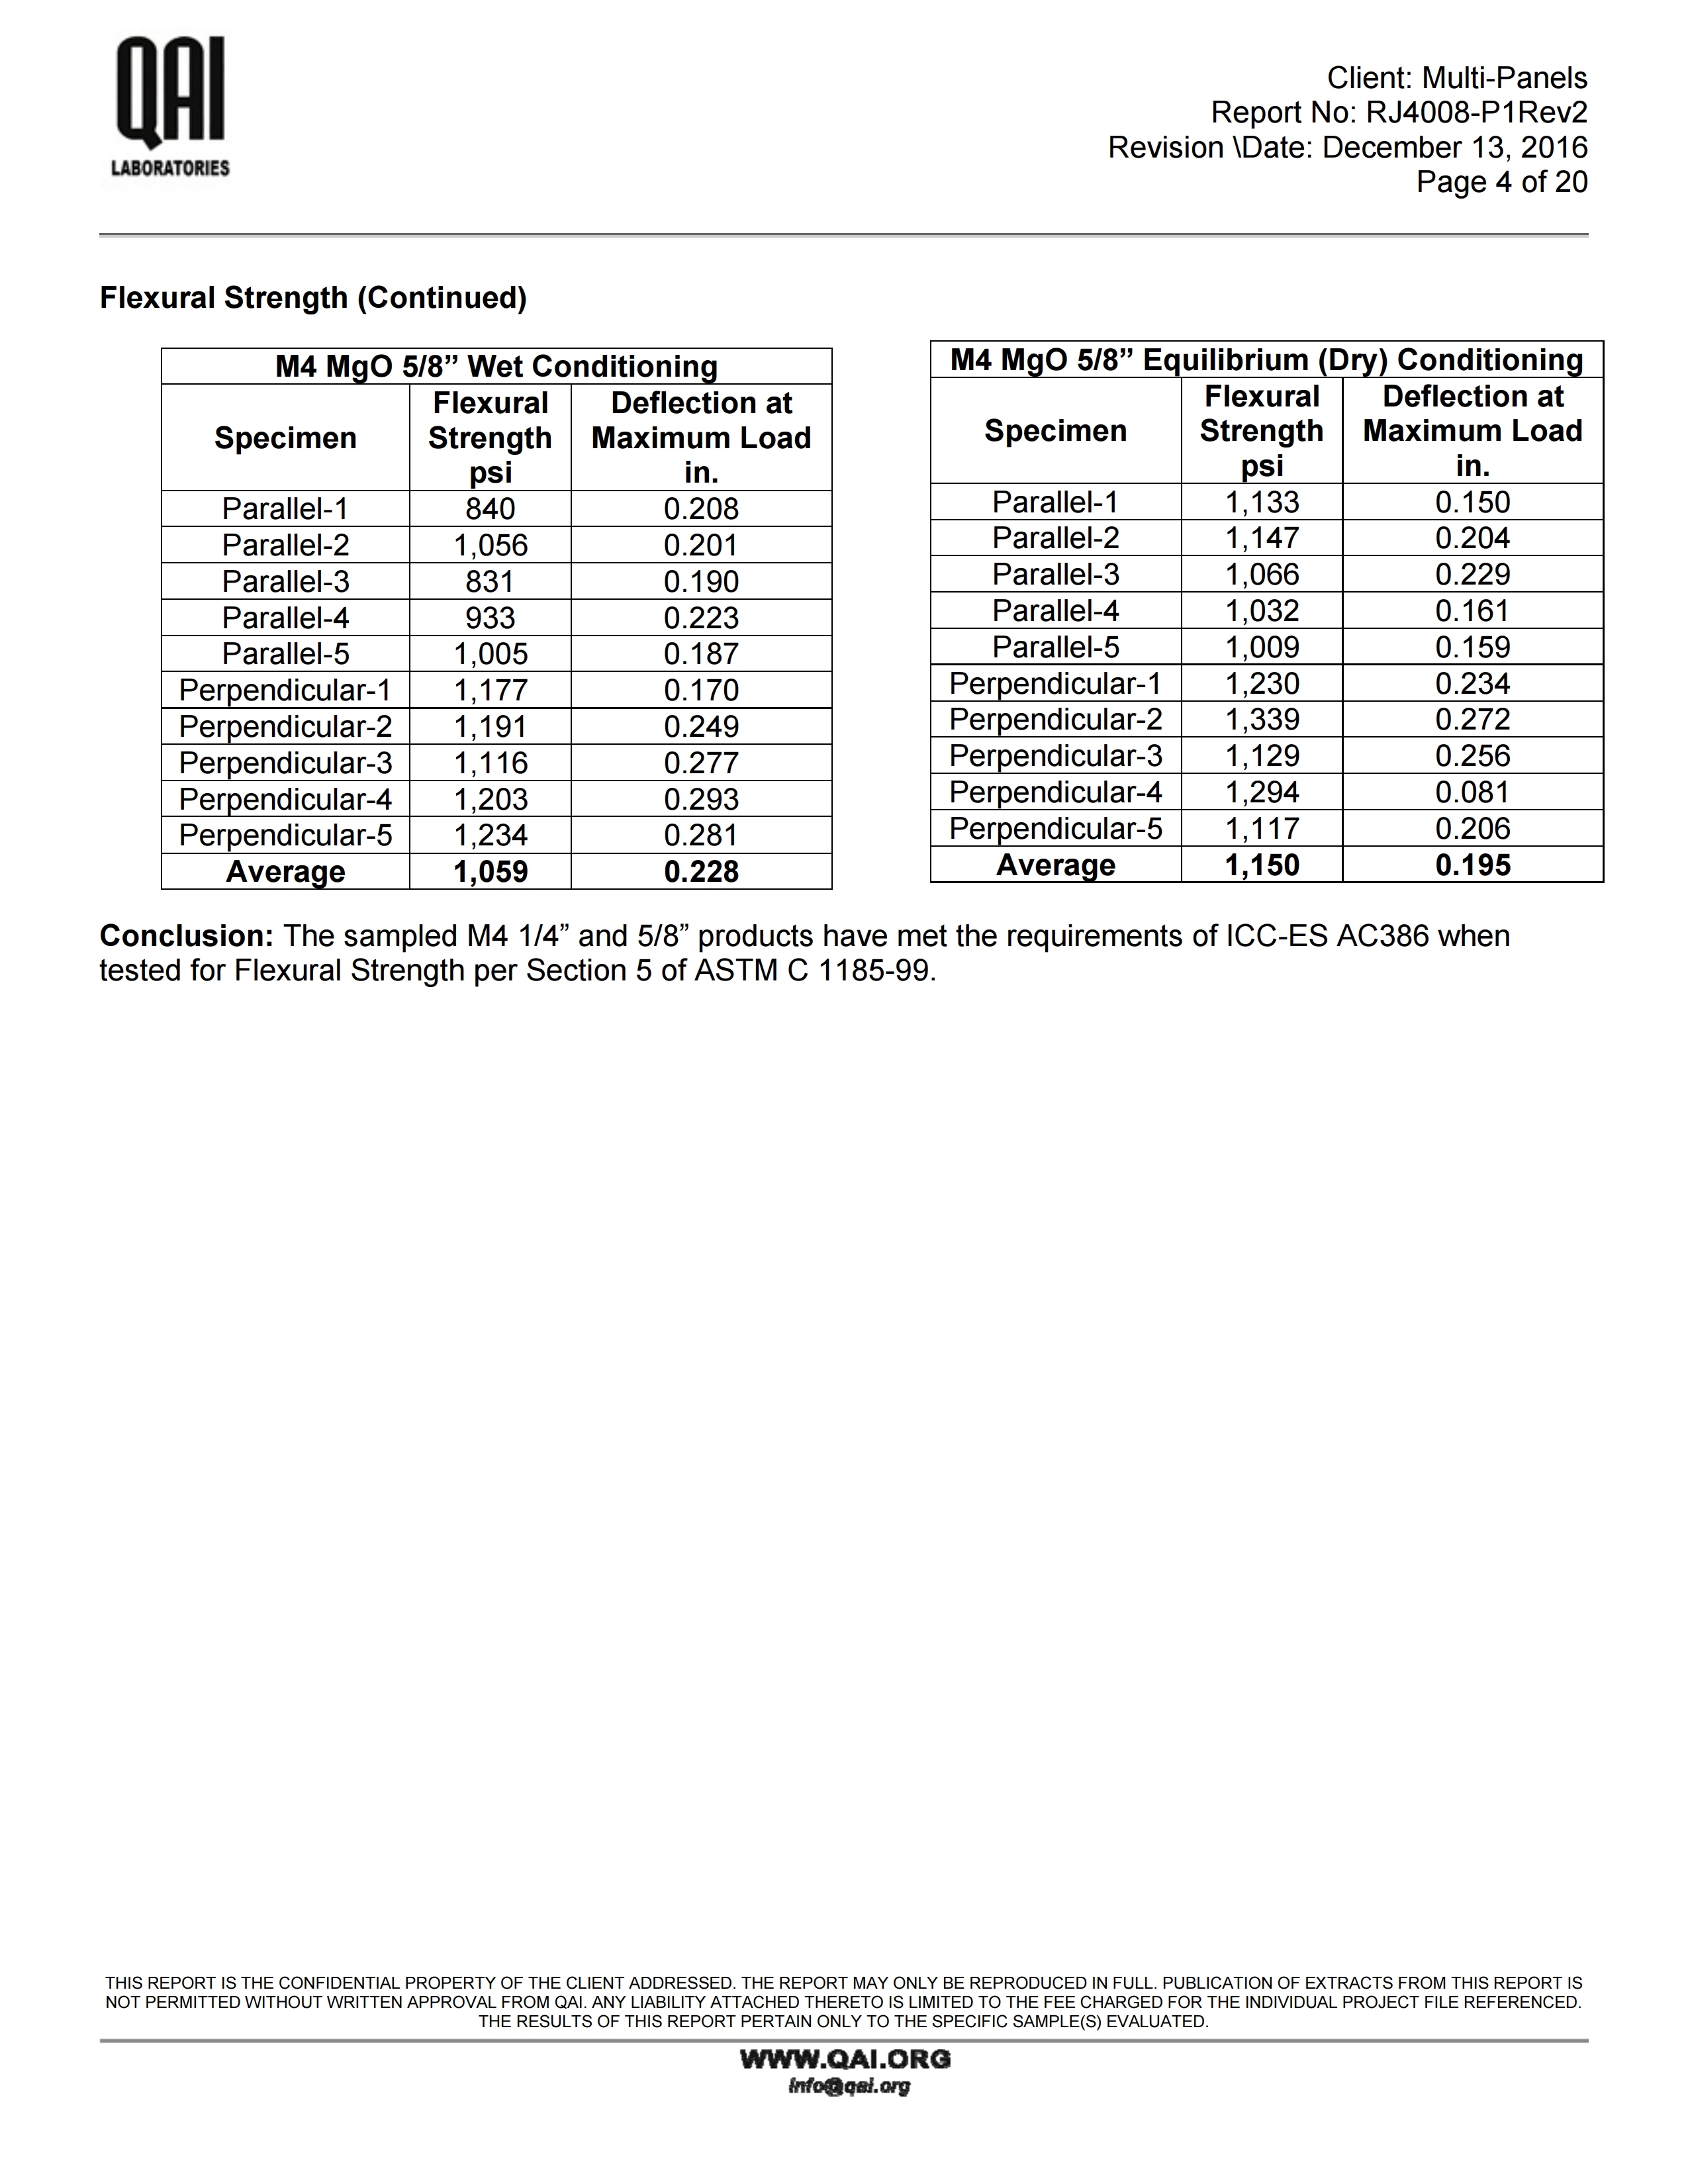 RJ4008-P1REV2-Multi-Panels-M4-AC386 Report-13122016 (2).pdf_page_04.jpg